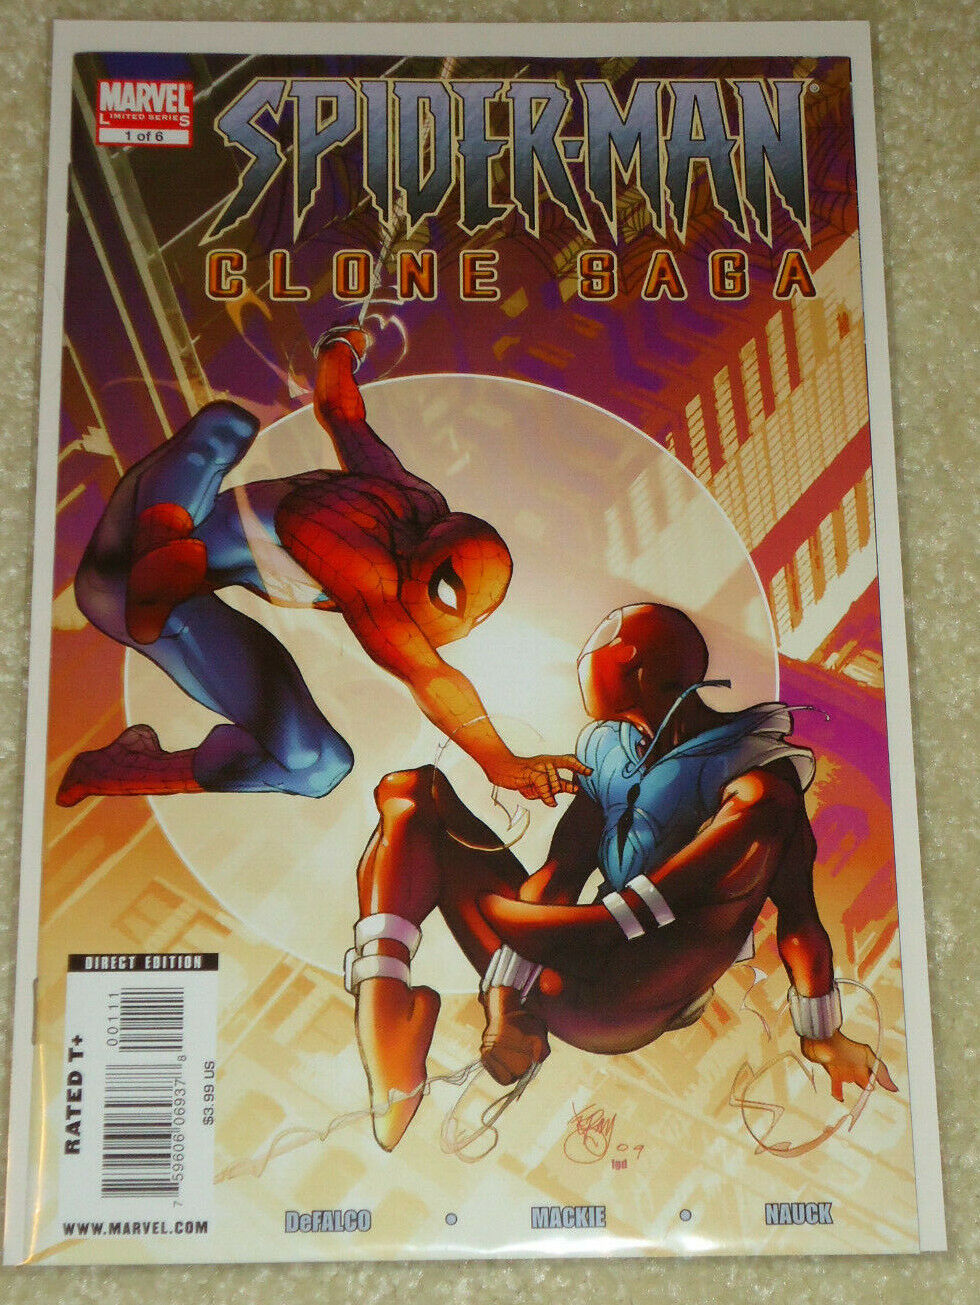 2009 Marvel Comics Spider-Man: The Clone Saga Mini-Series #1- Secrets Revealed